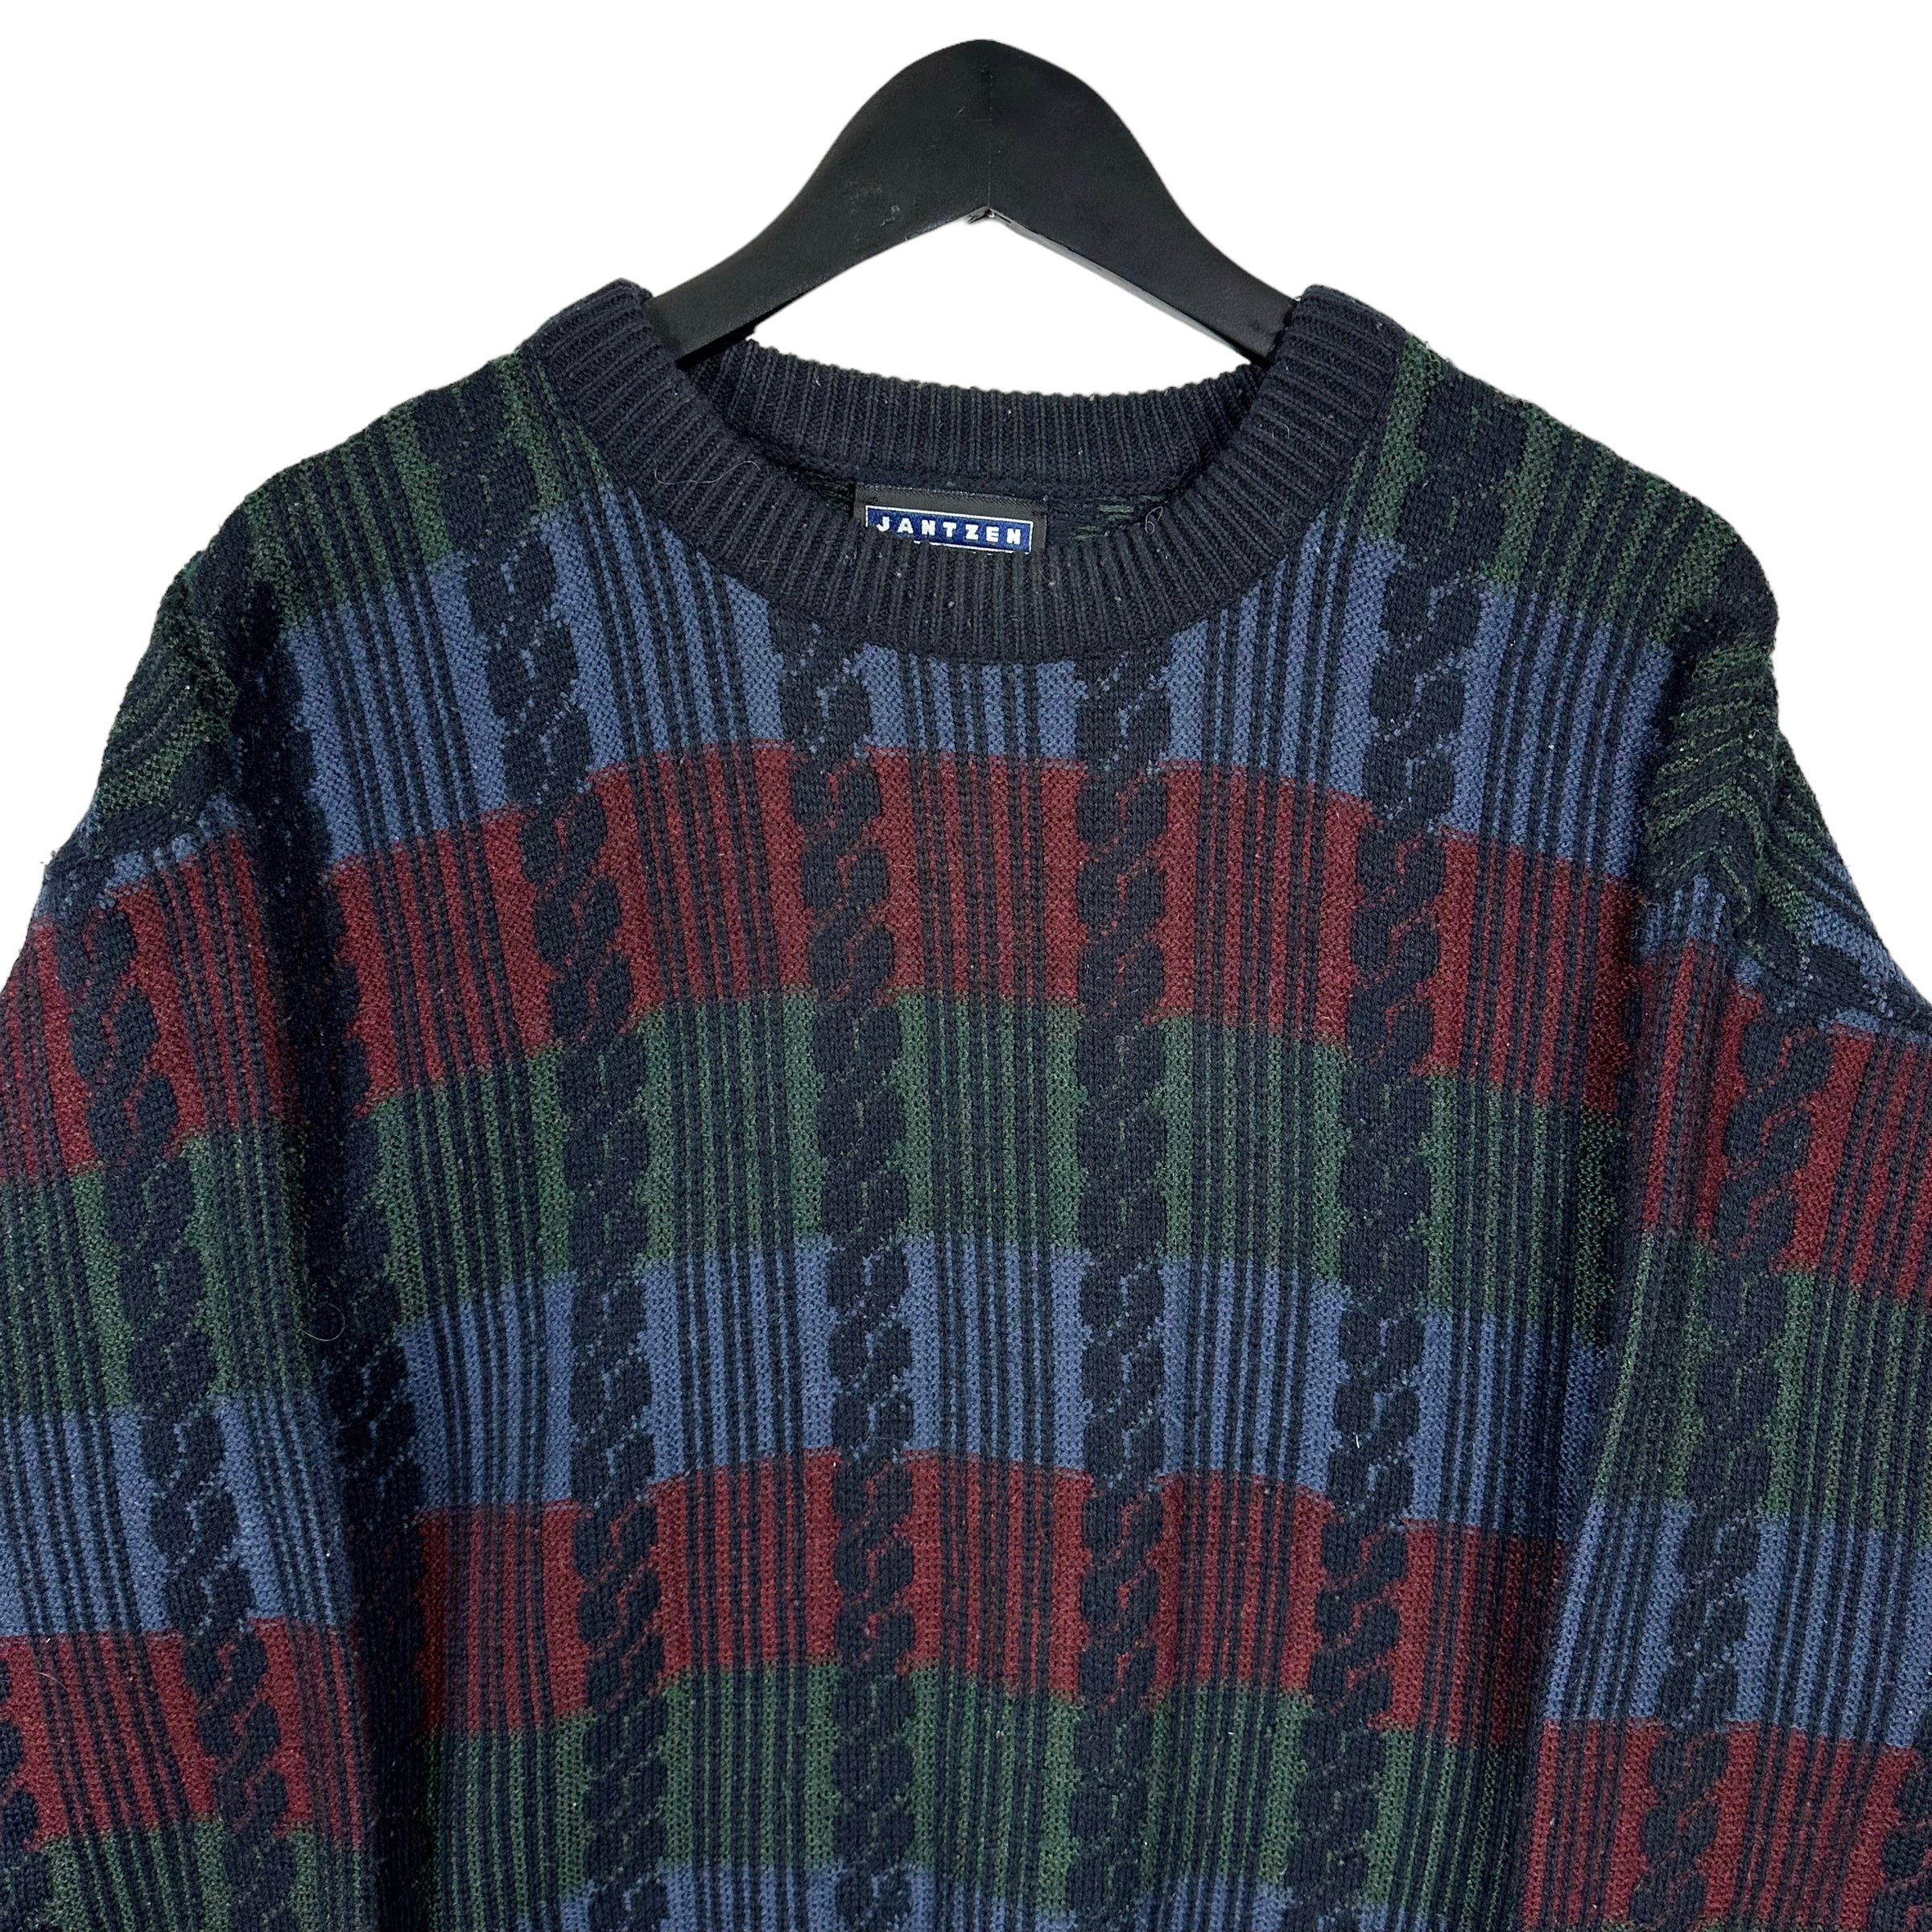 Vintage Jantzen Multicolored Sweater